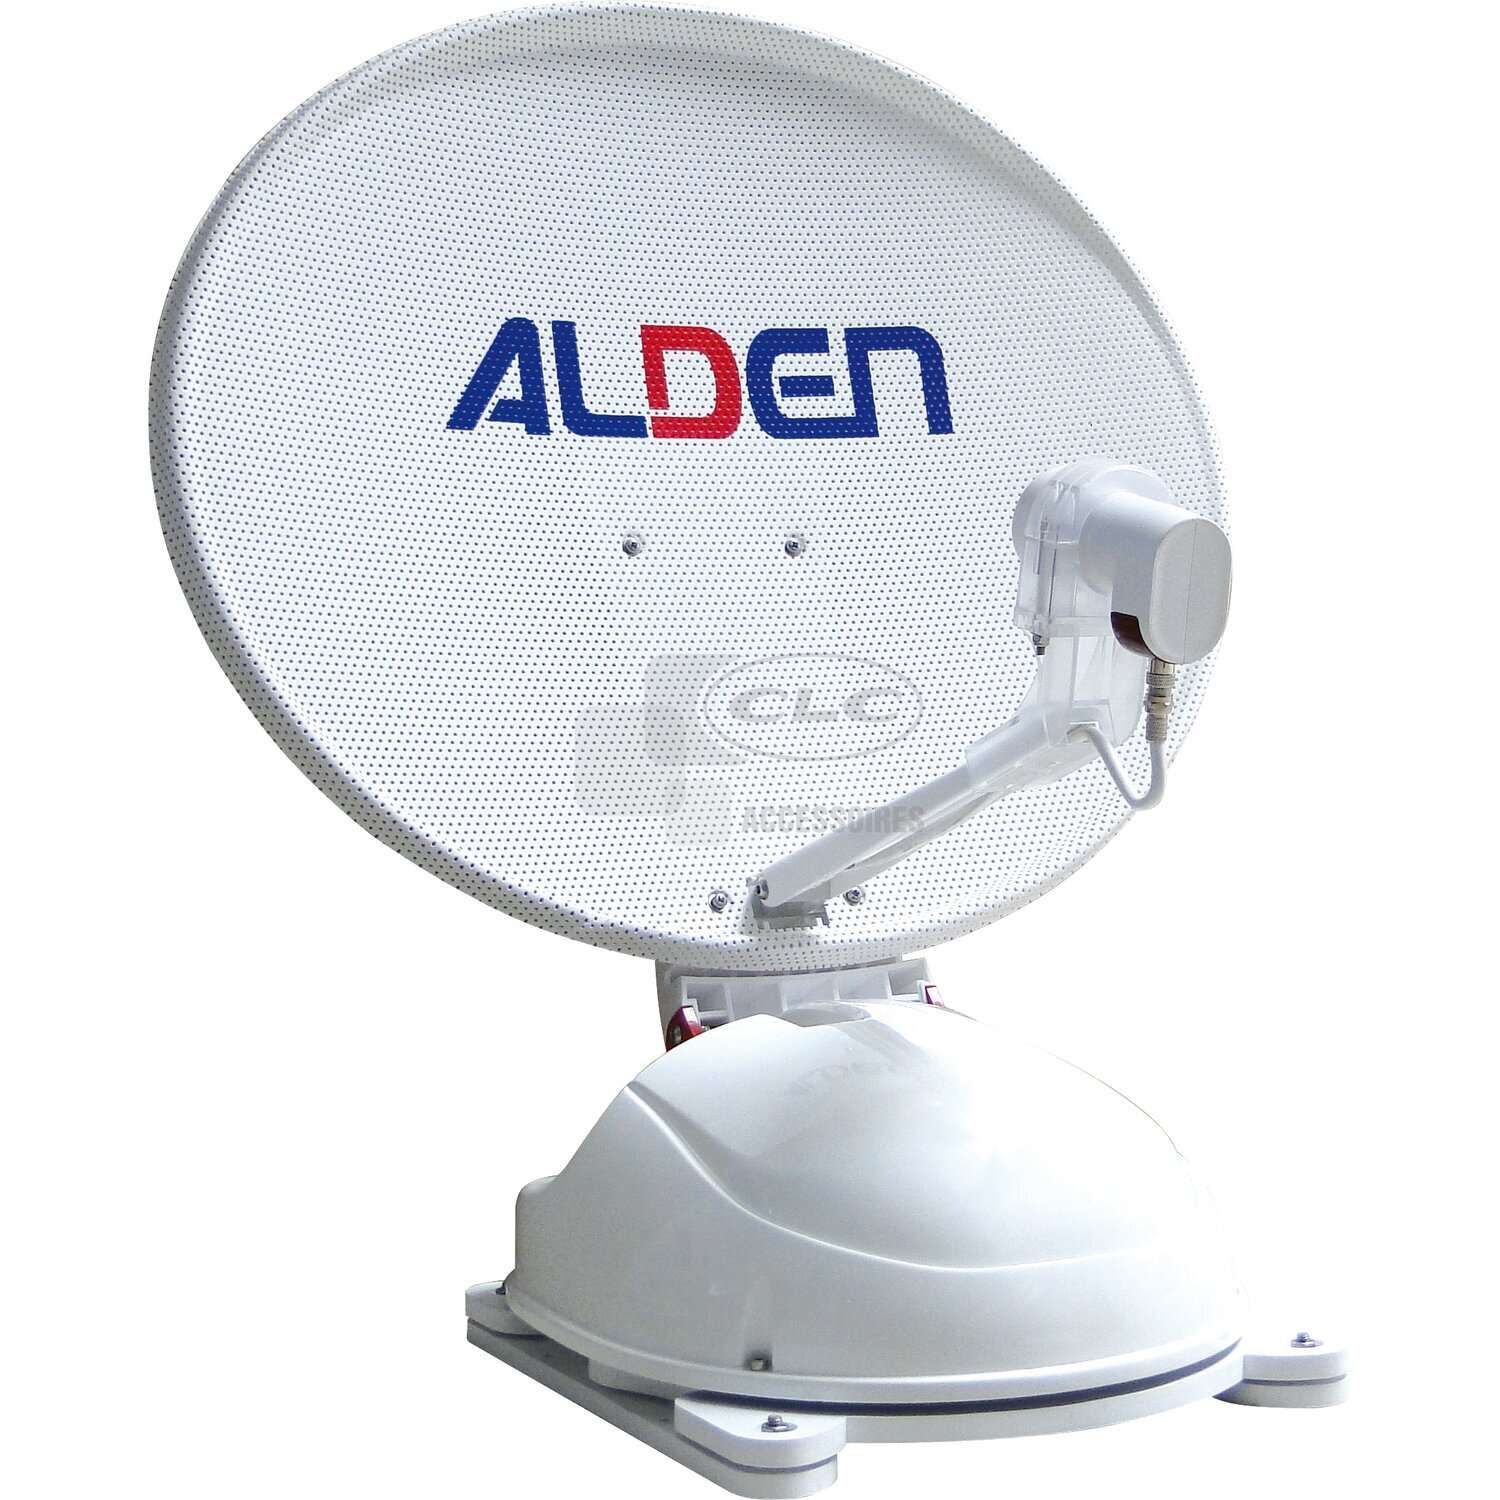 Antennes - Satellite & Antennes - Installateur - Assortiment